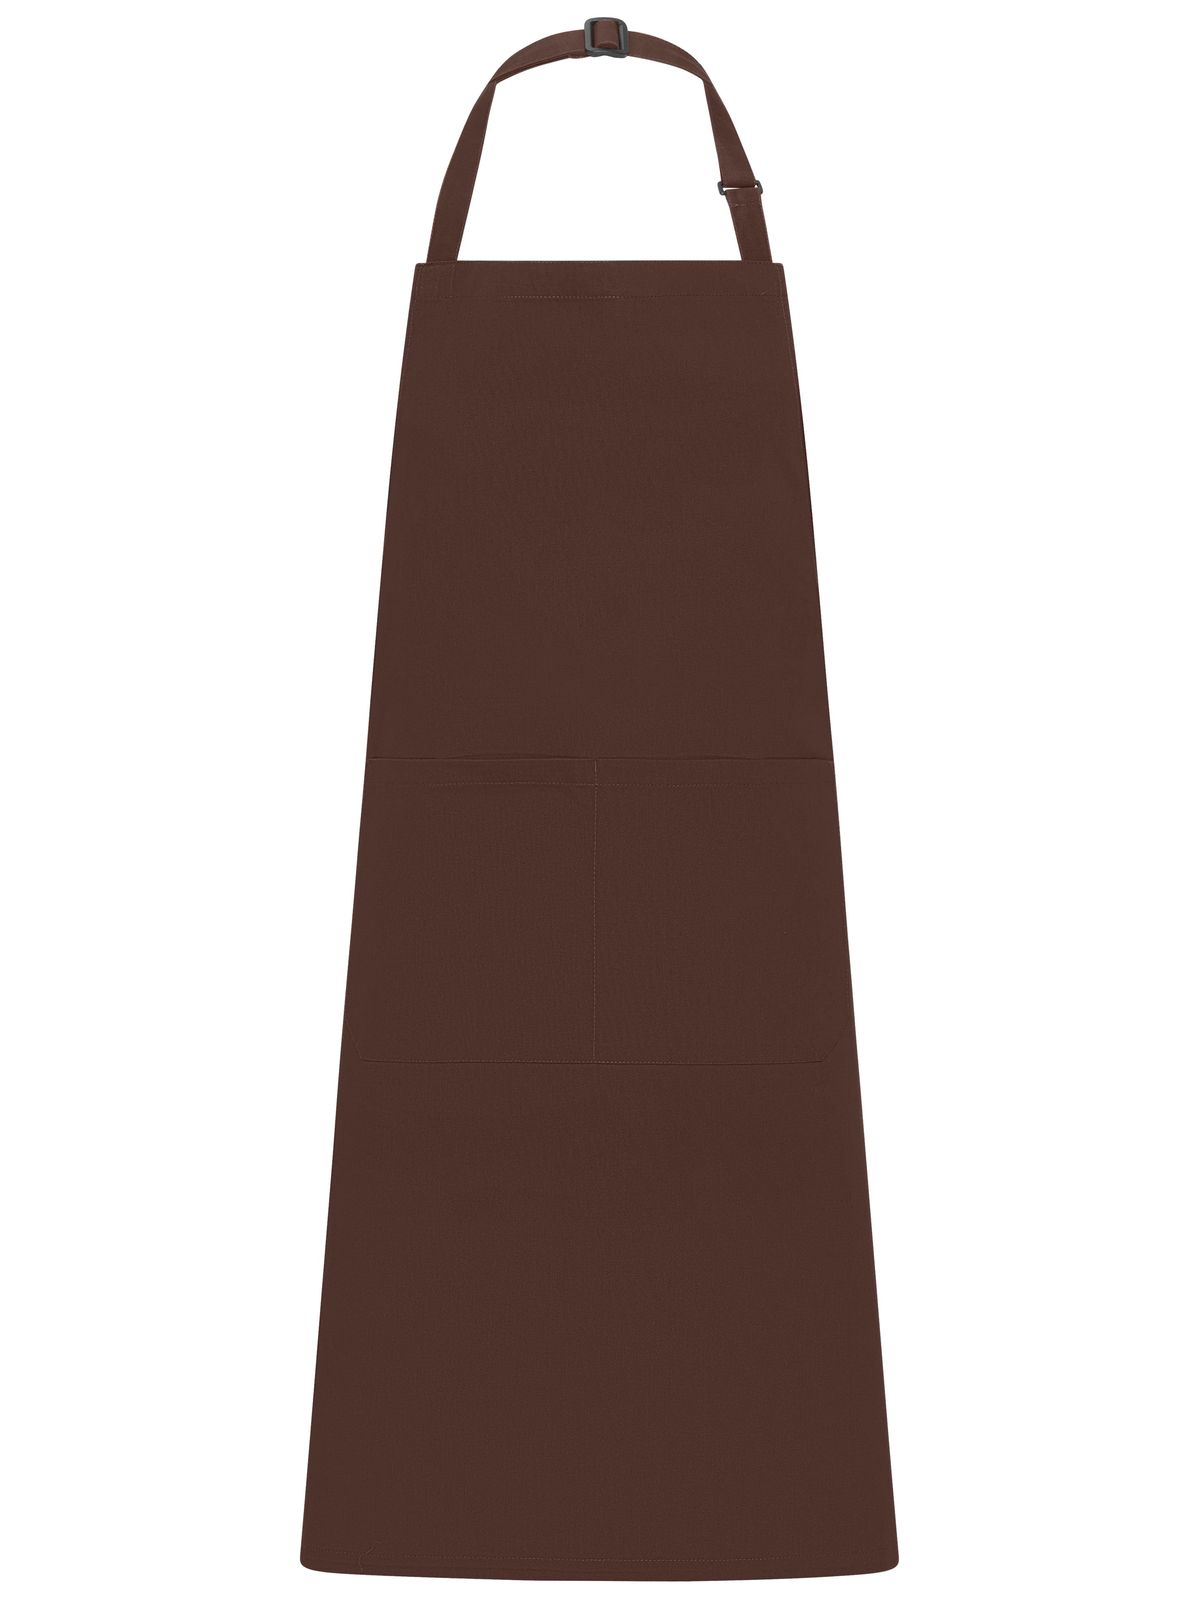 apron-with-bib-brown.webp